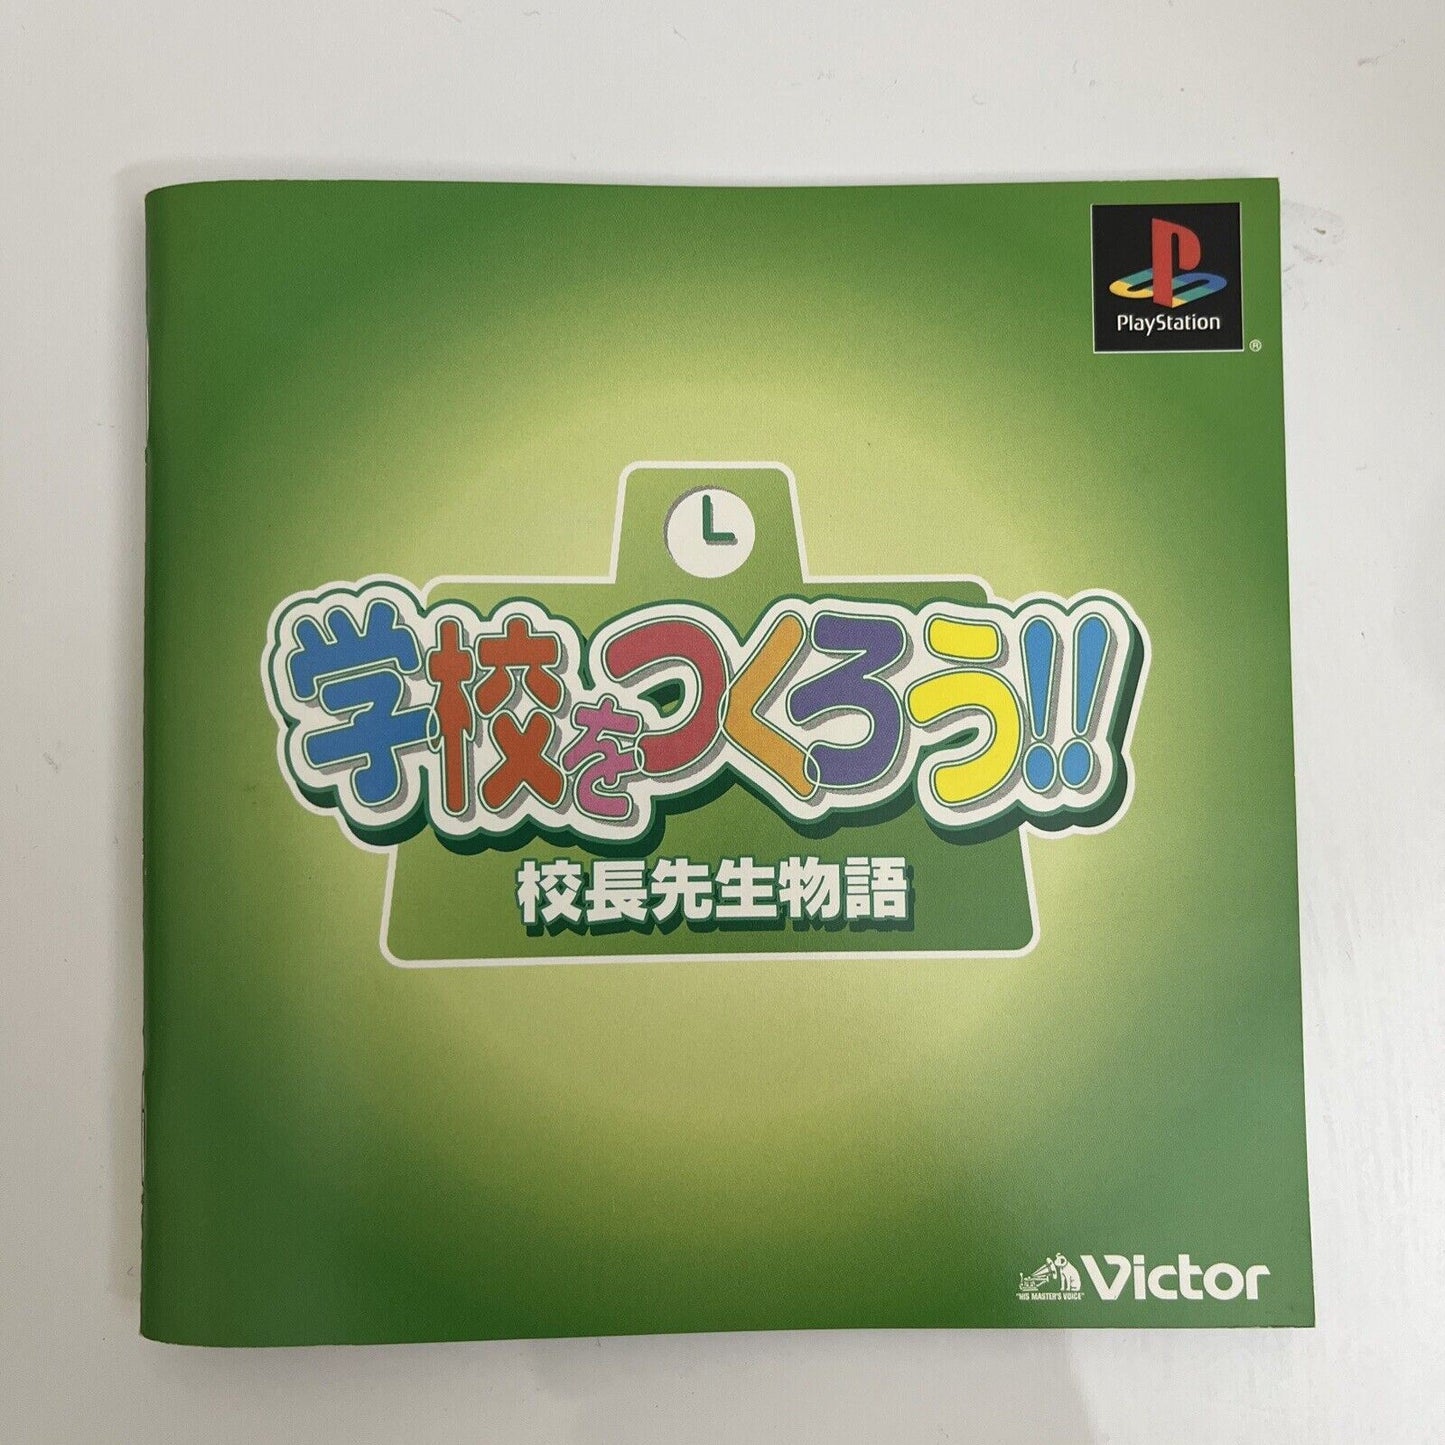 Let's Create a School: School Principal - Sony PlayStation PS1 NTSC-J JAPAN Game